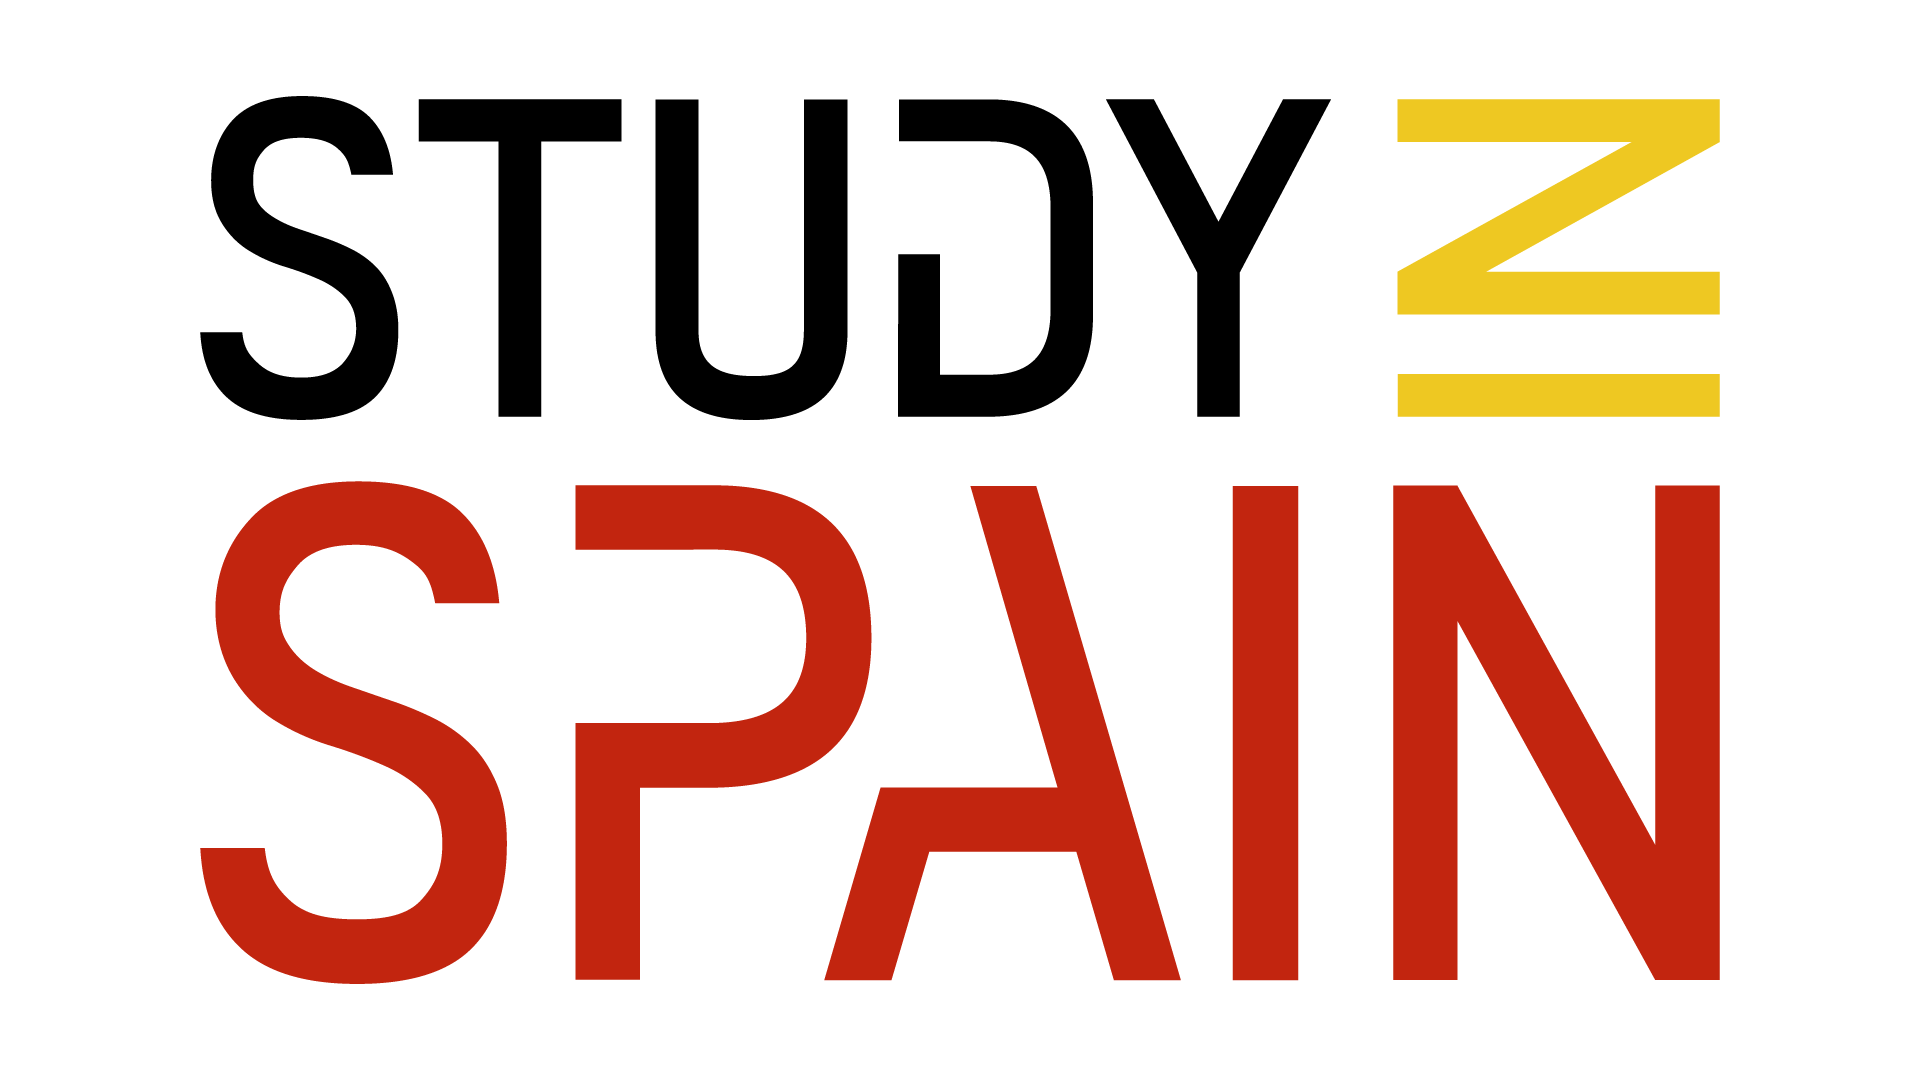 Estudiar en Espaa